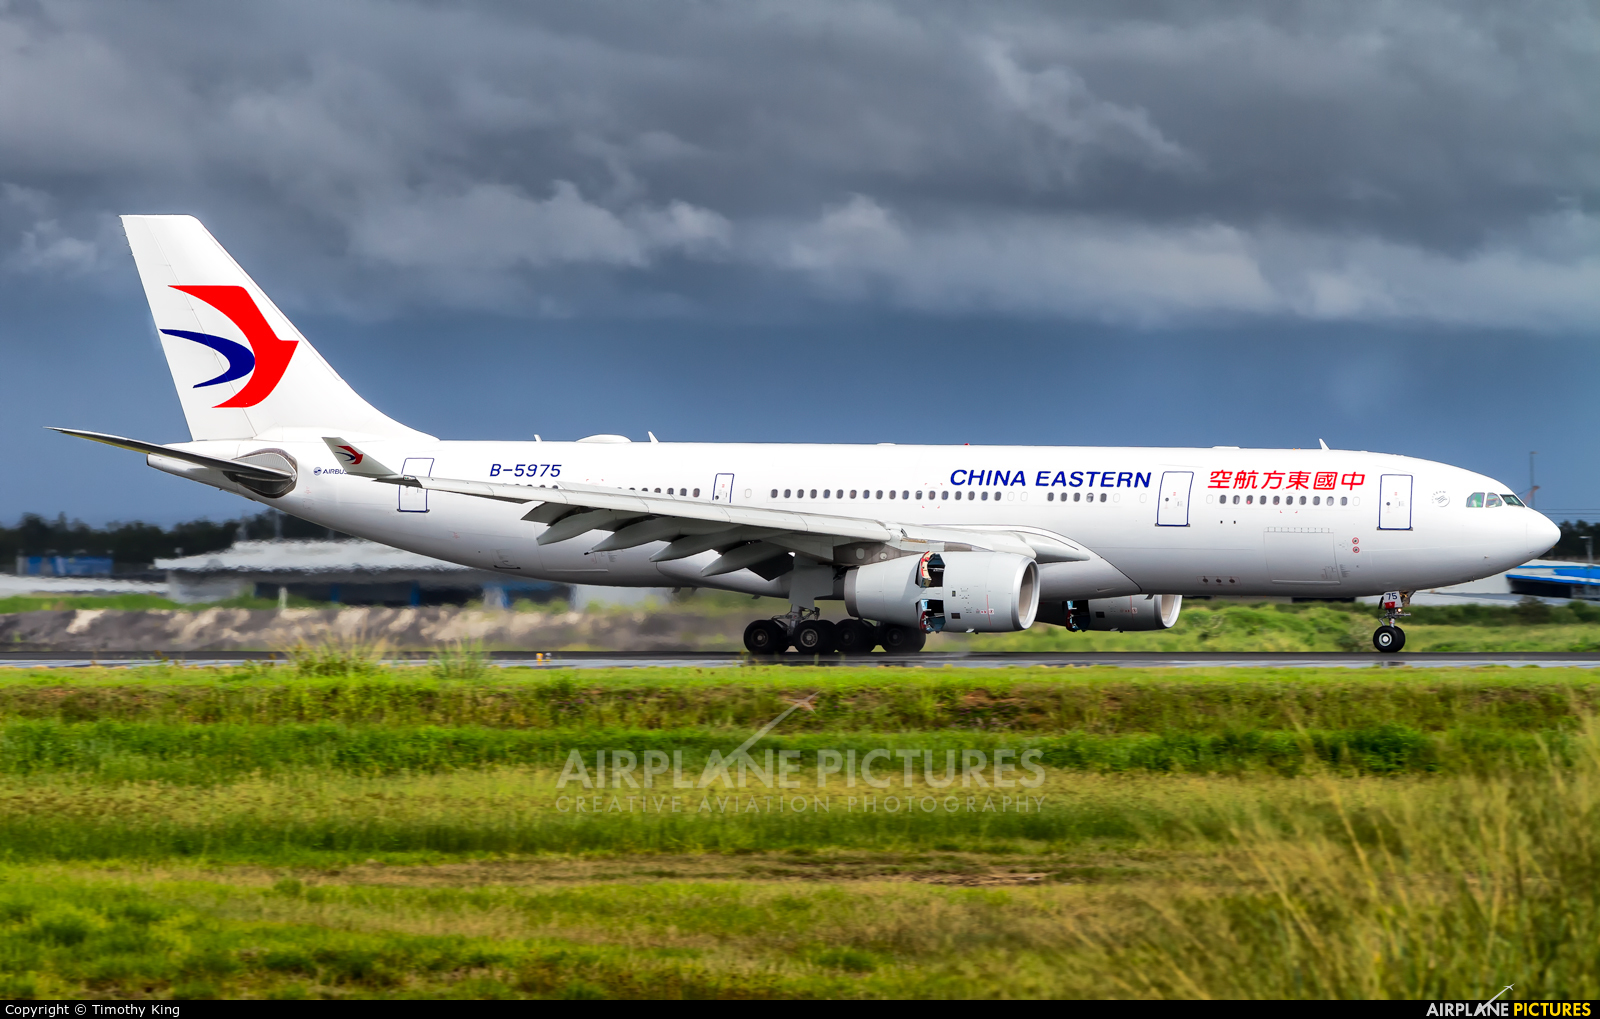 China Eastern Airlines B-5975 aircraft at Brisbane, QLD